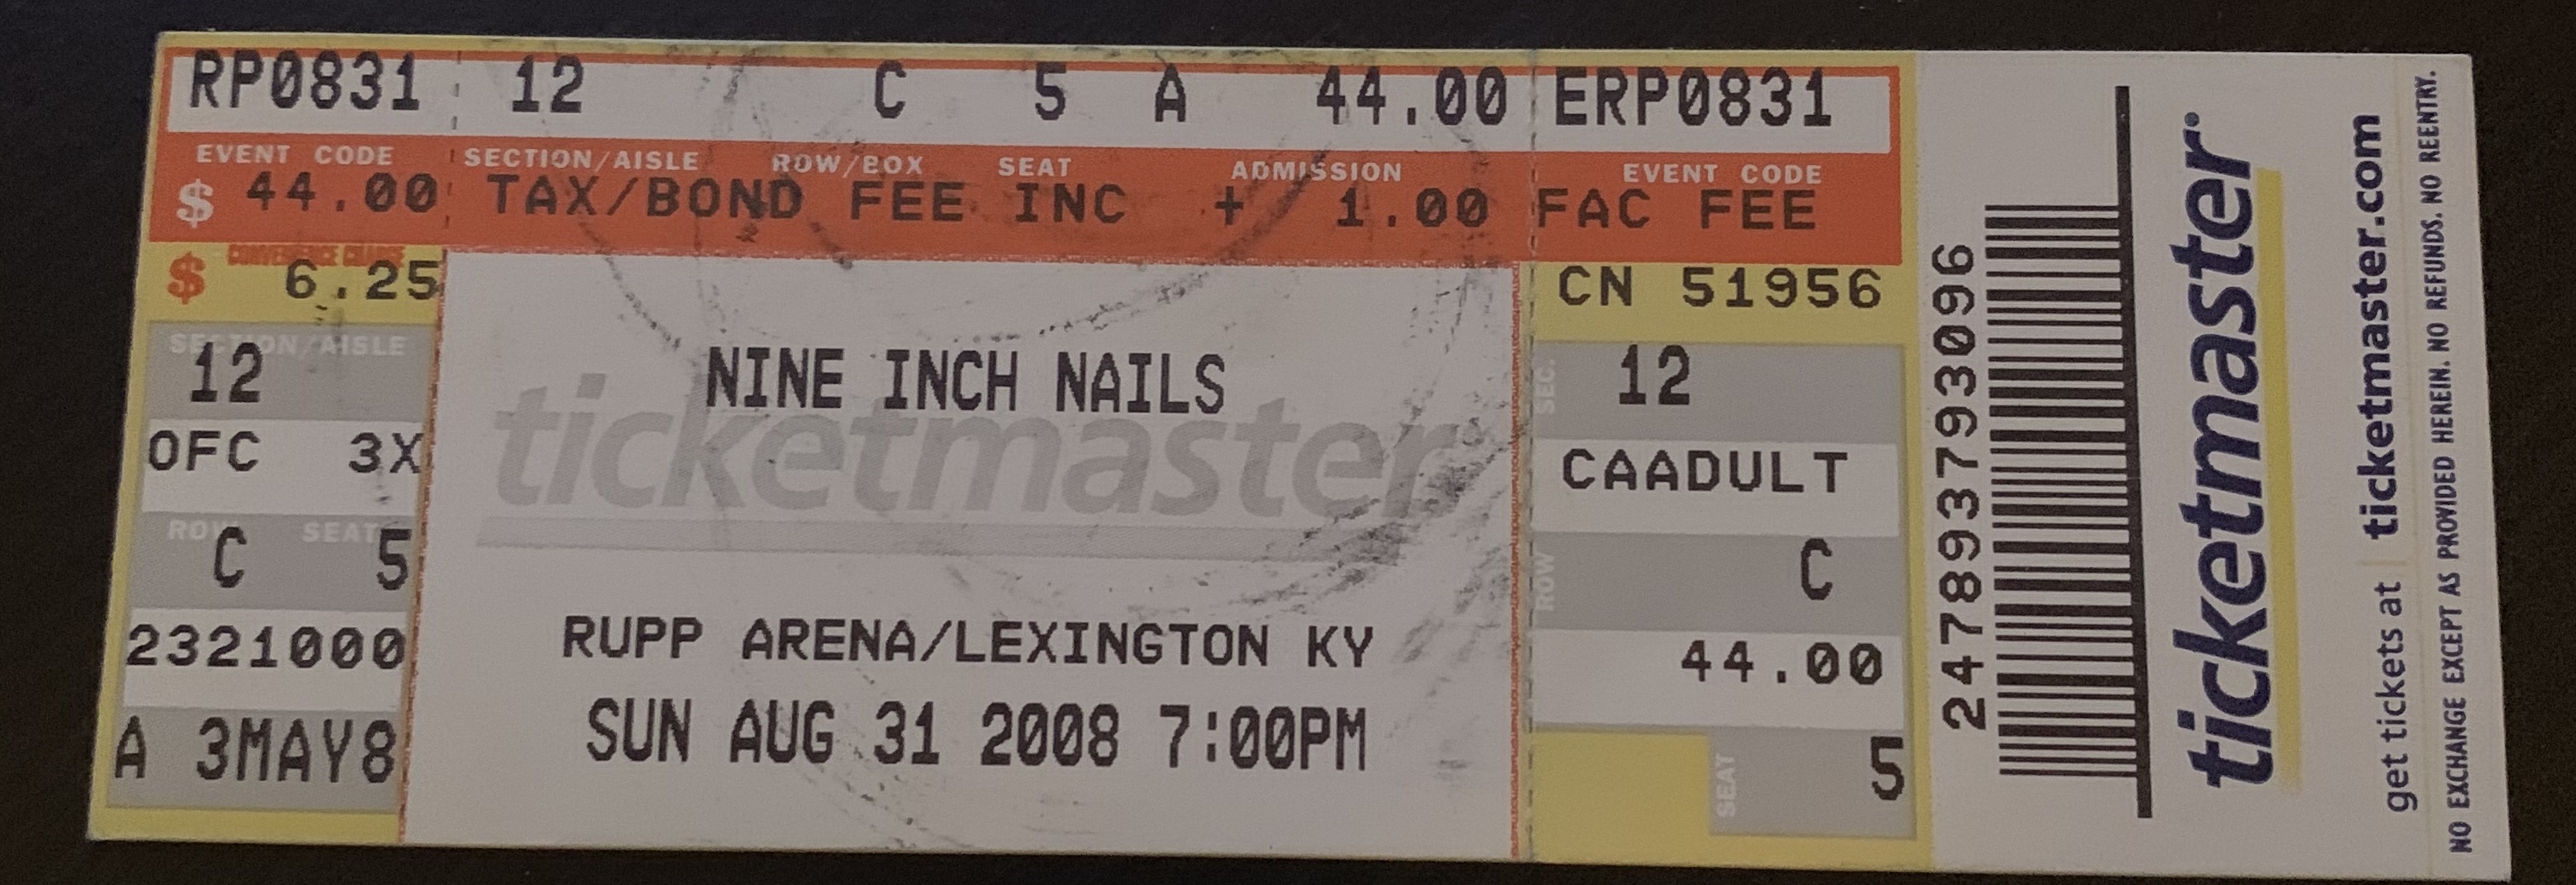 2008/08/31 Ticket